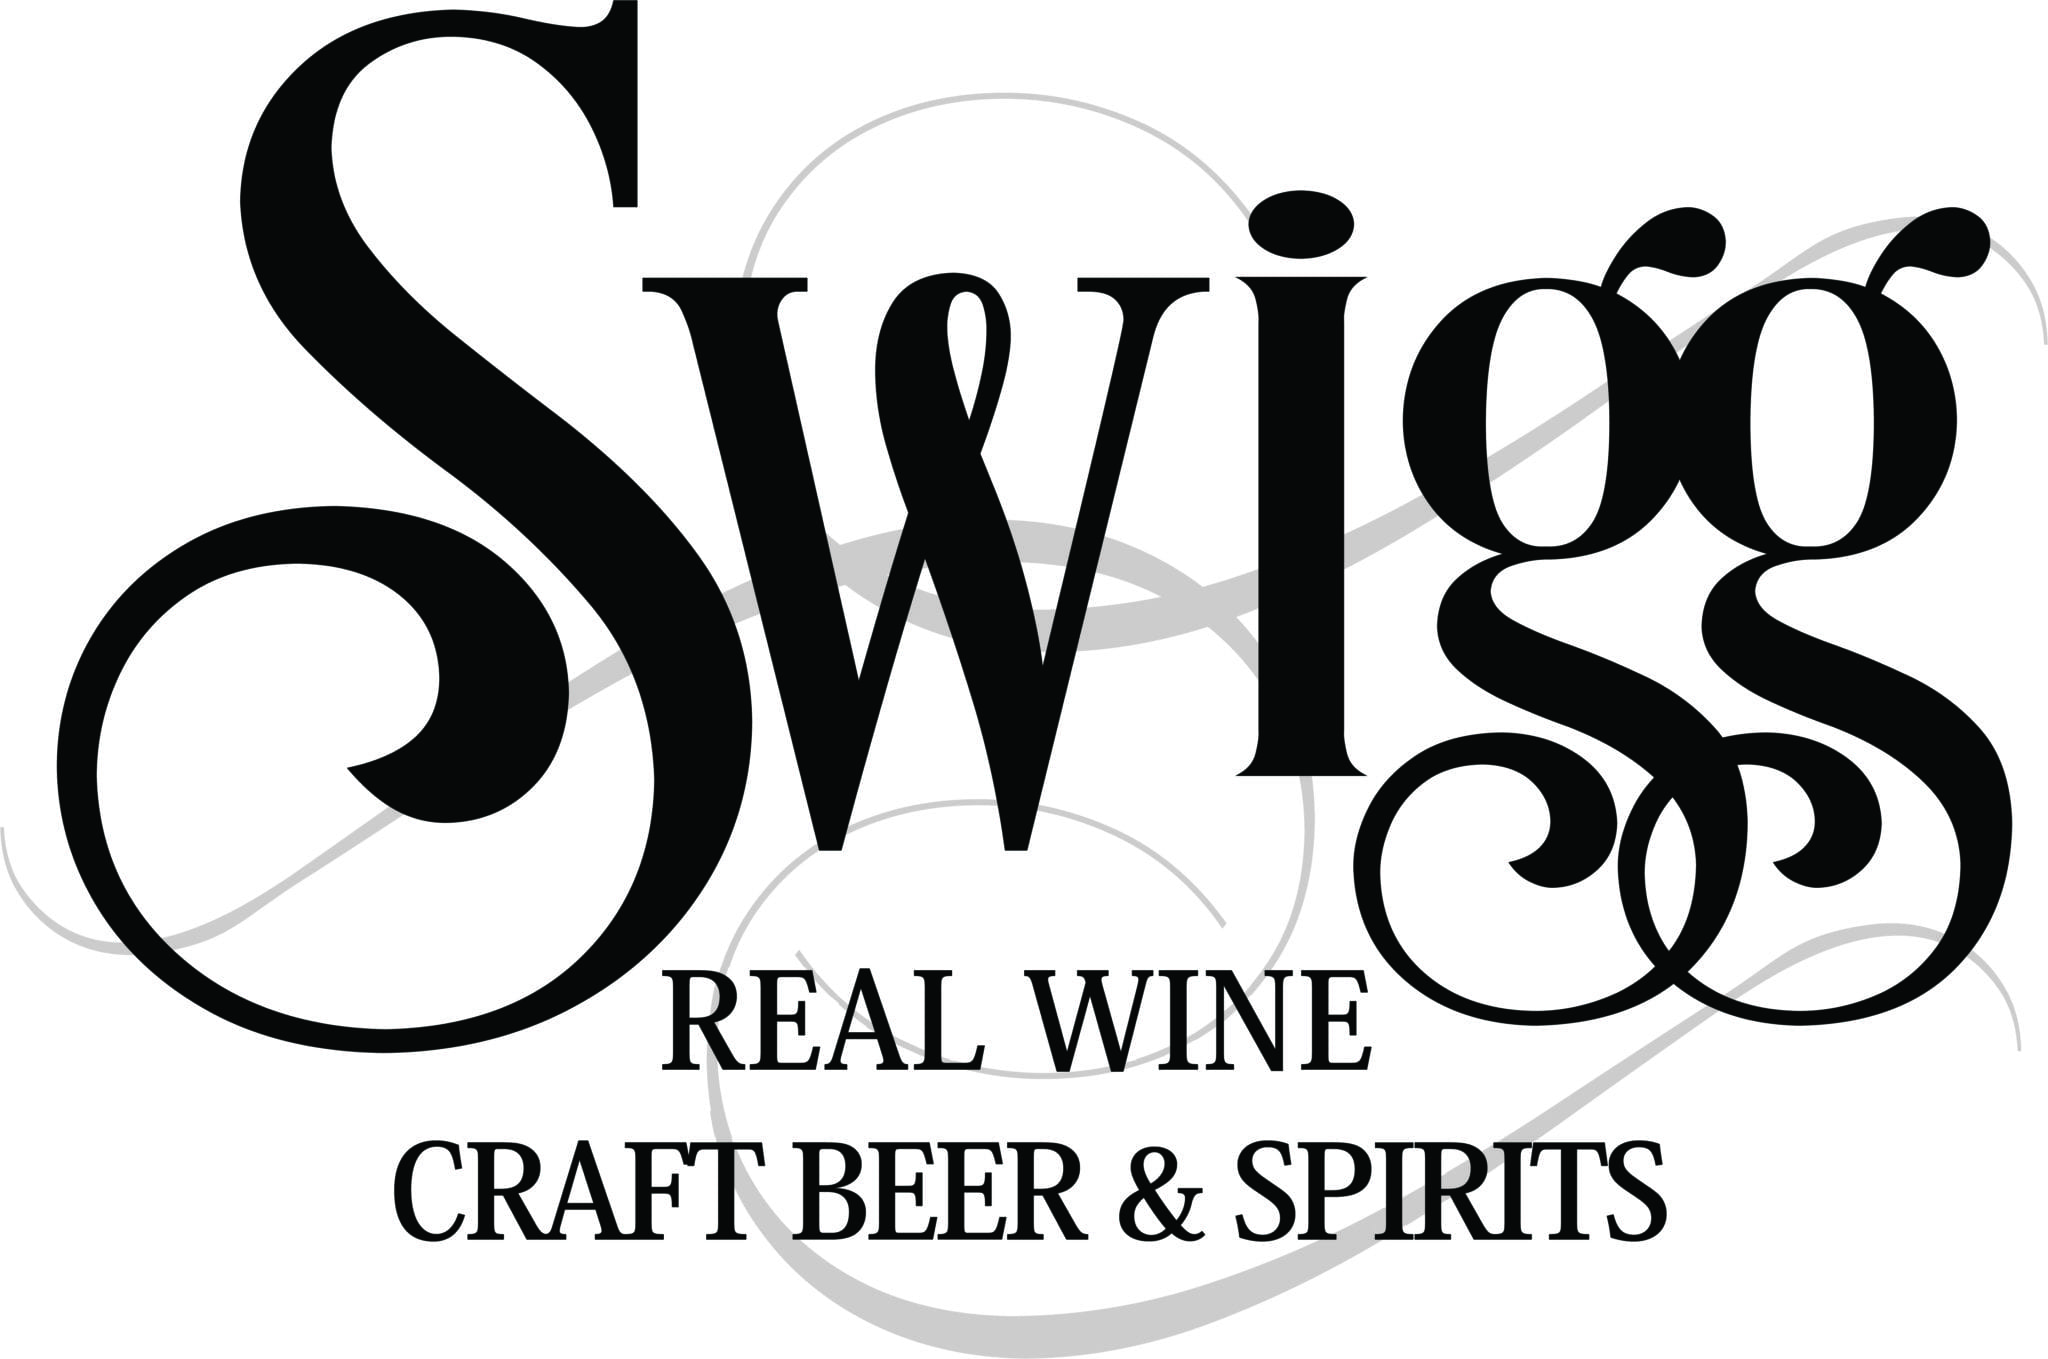 Swigg Real Wine, Craft Beer & Spirits offers Winterthur members discounts.